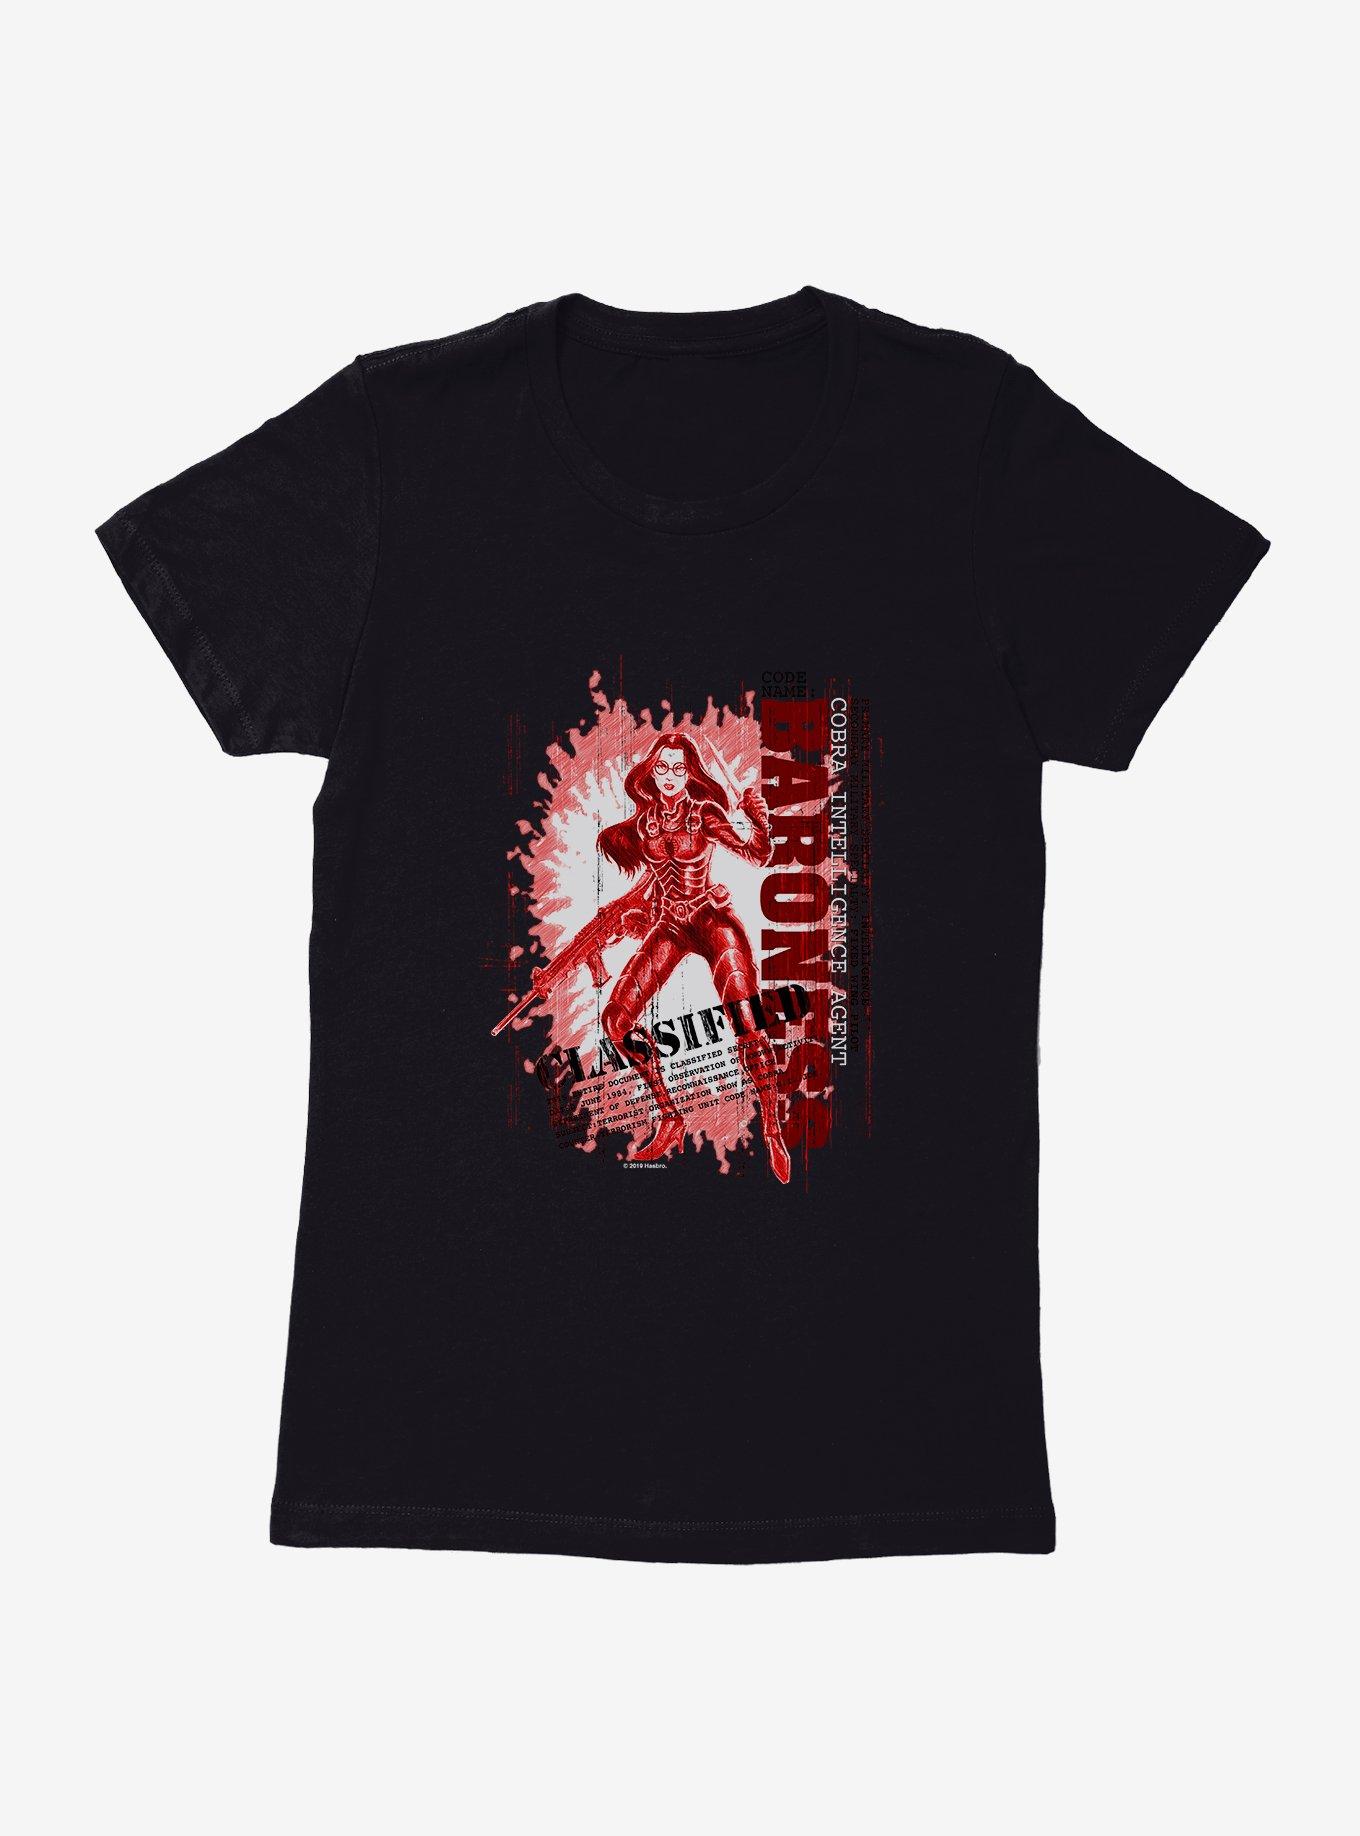 G.I. Joe Classified Womens T-Shirt, BLACK, hi-res